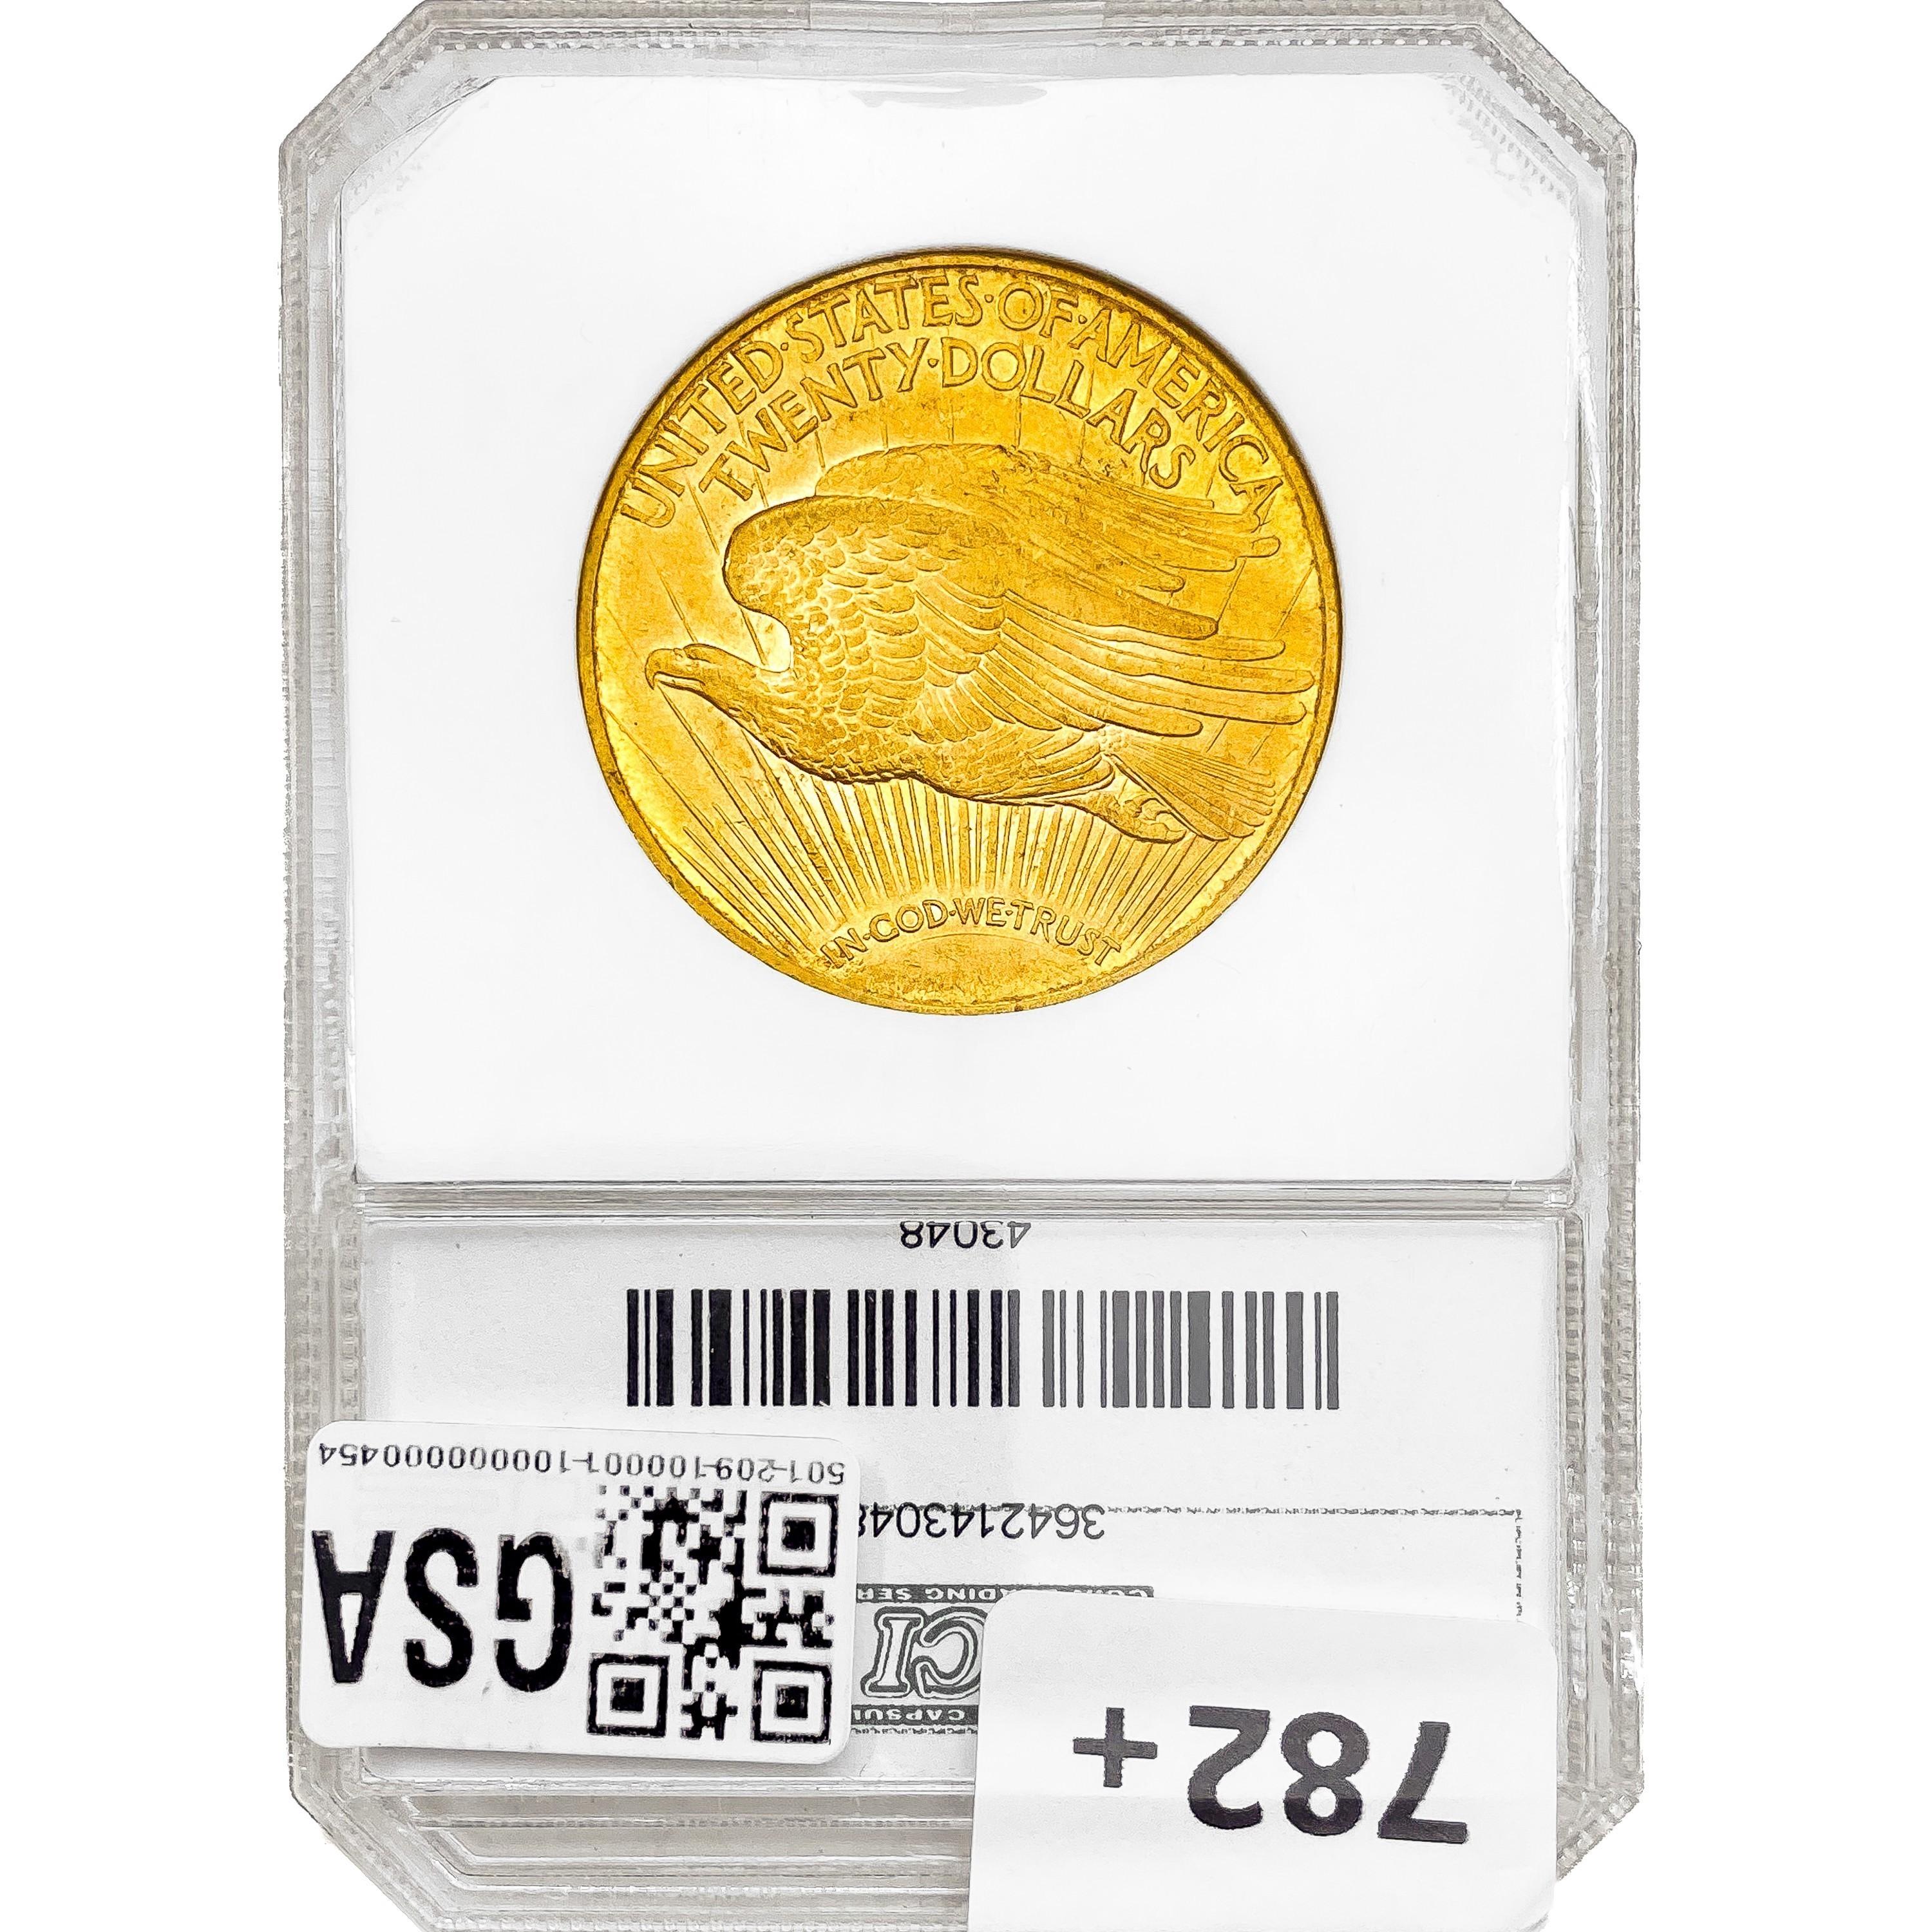 1909/8 $20 Gold Double Eagle PCI MS65